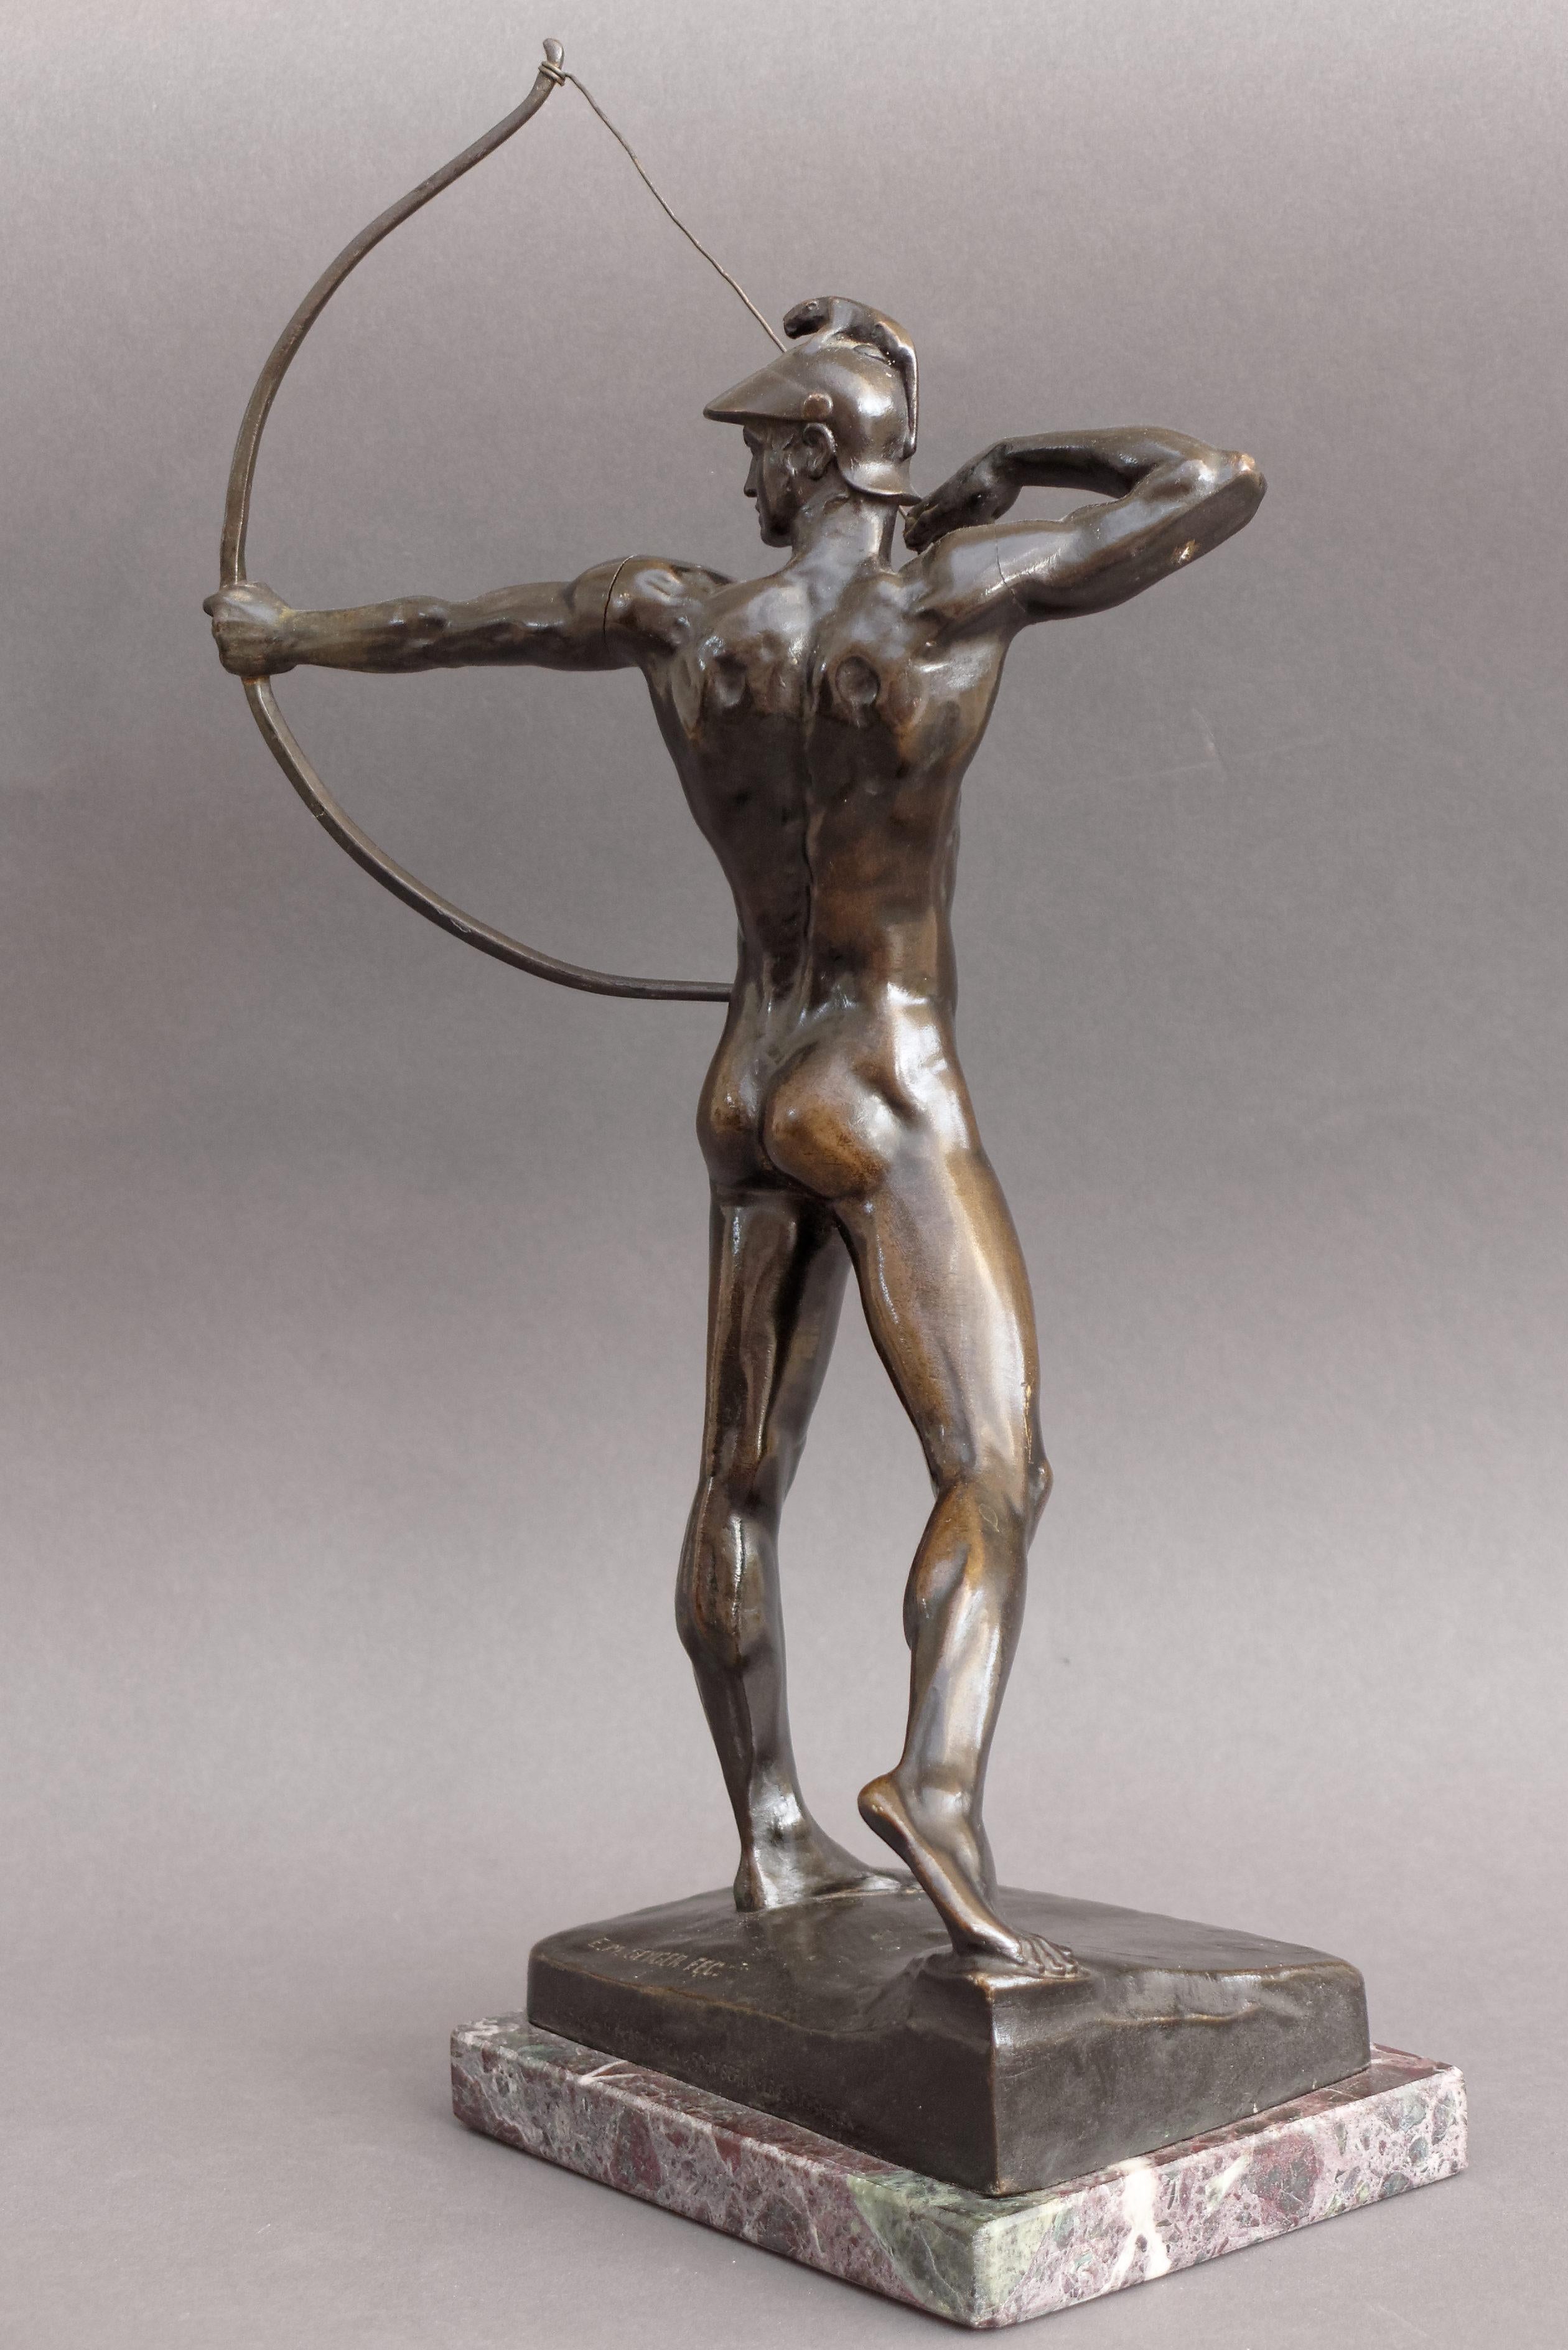 20th Century German Bronze Male Nude Figure 'The Archer' by Ernst Moritz Geyger, Berlin